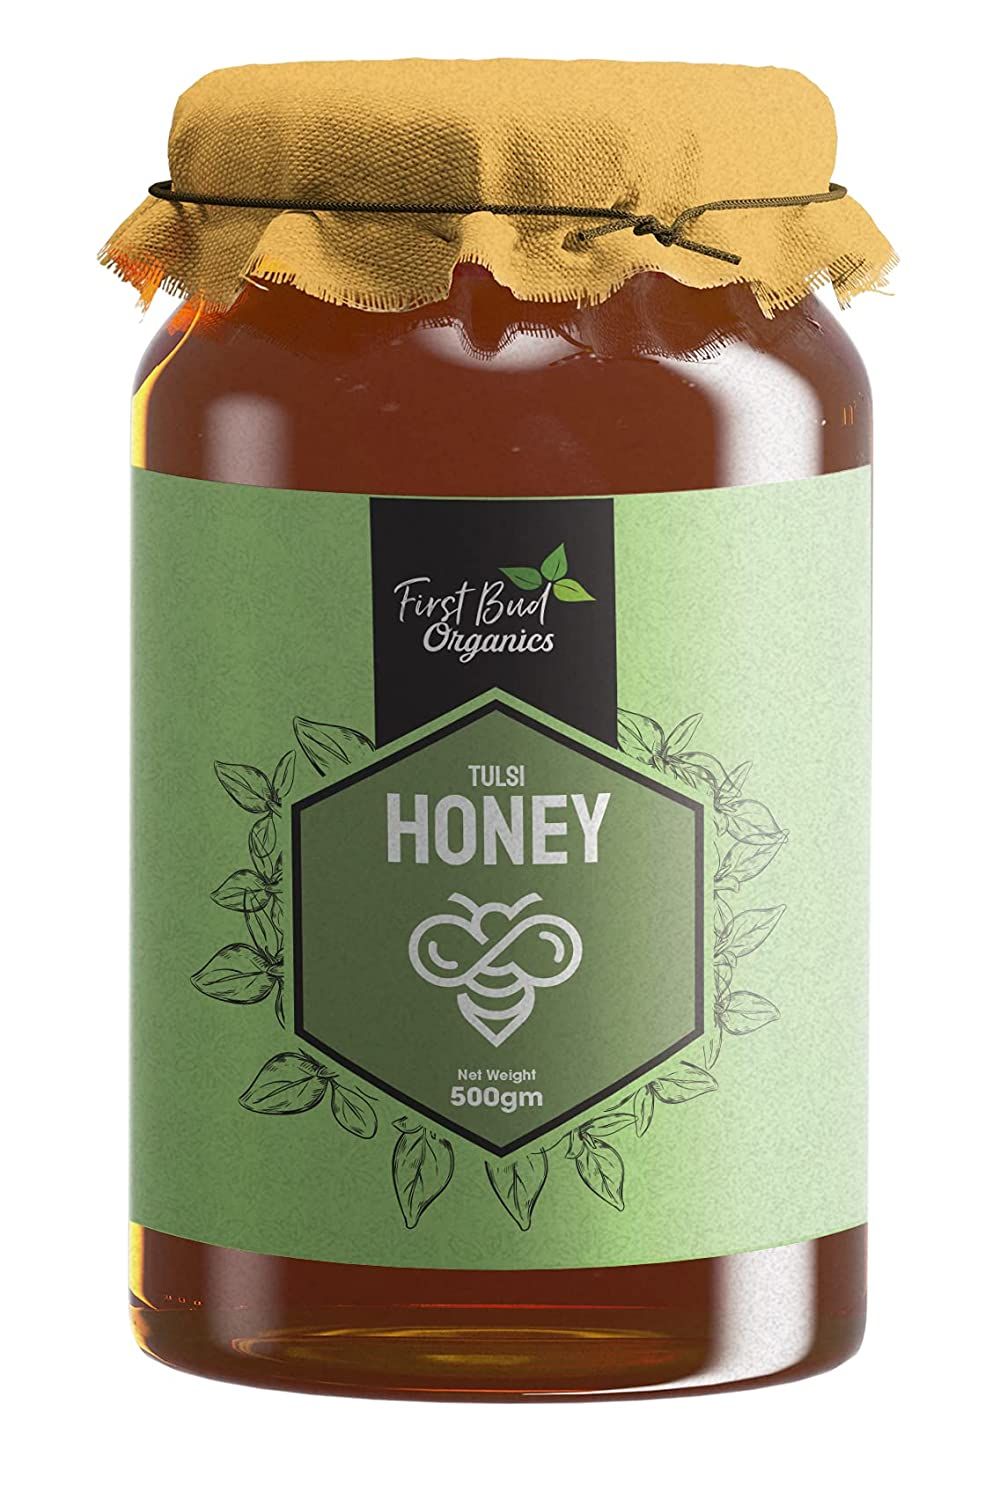 First Bud Organics Tulsi Honey Image